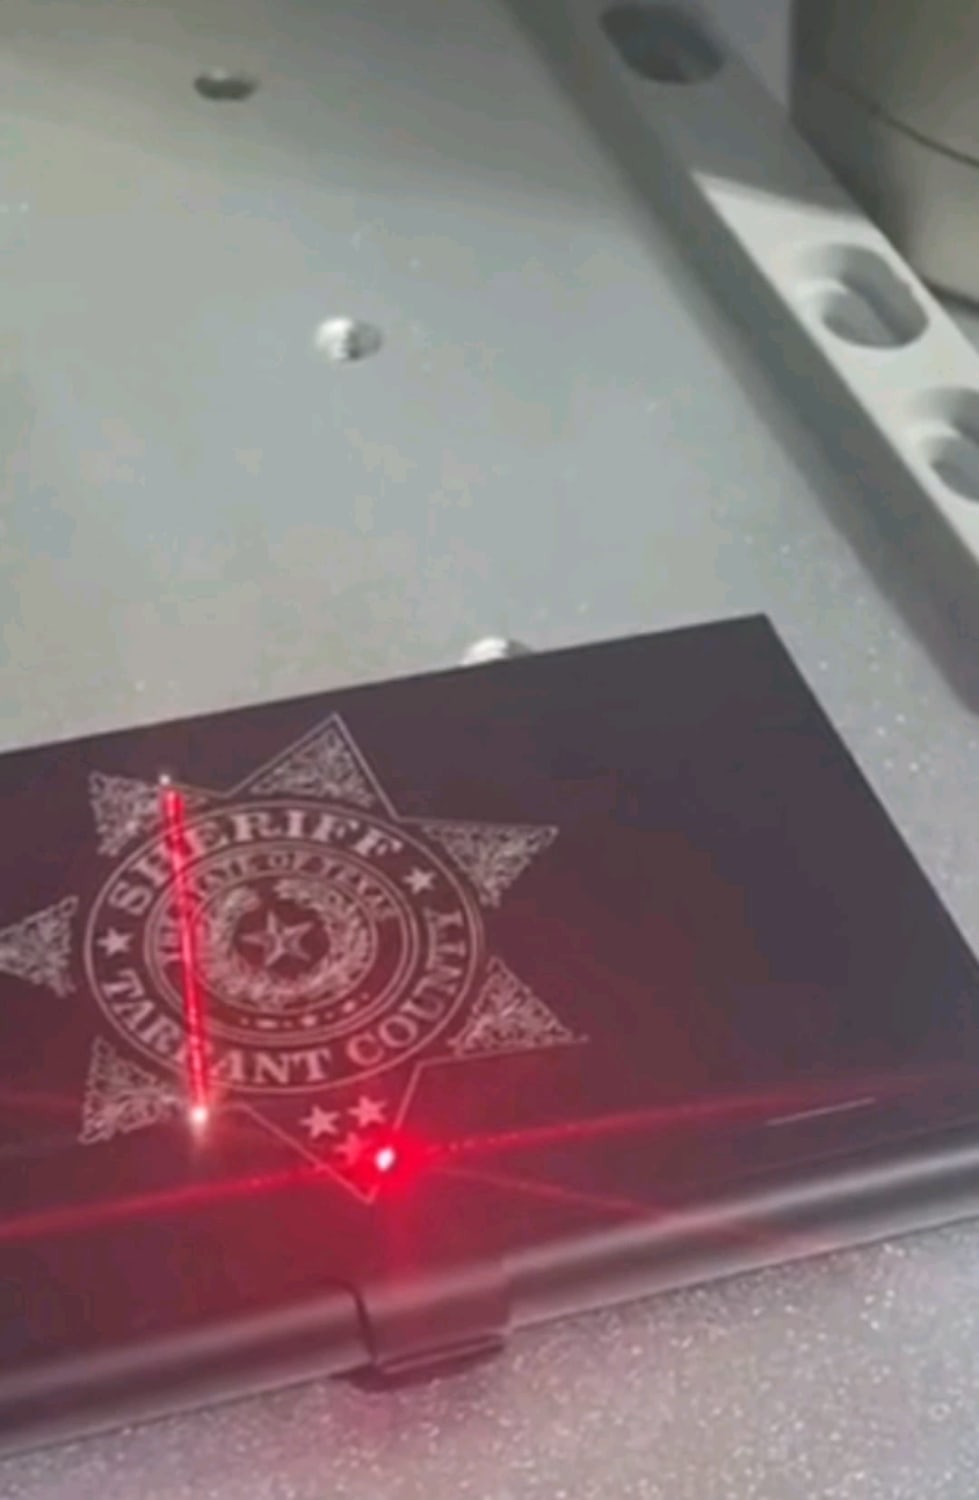 This laser engraving (sound on)